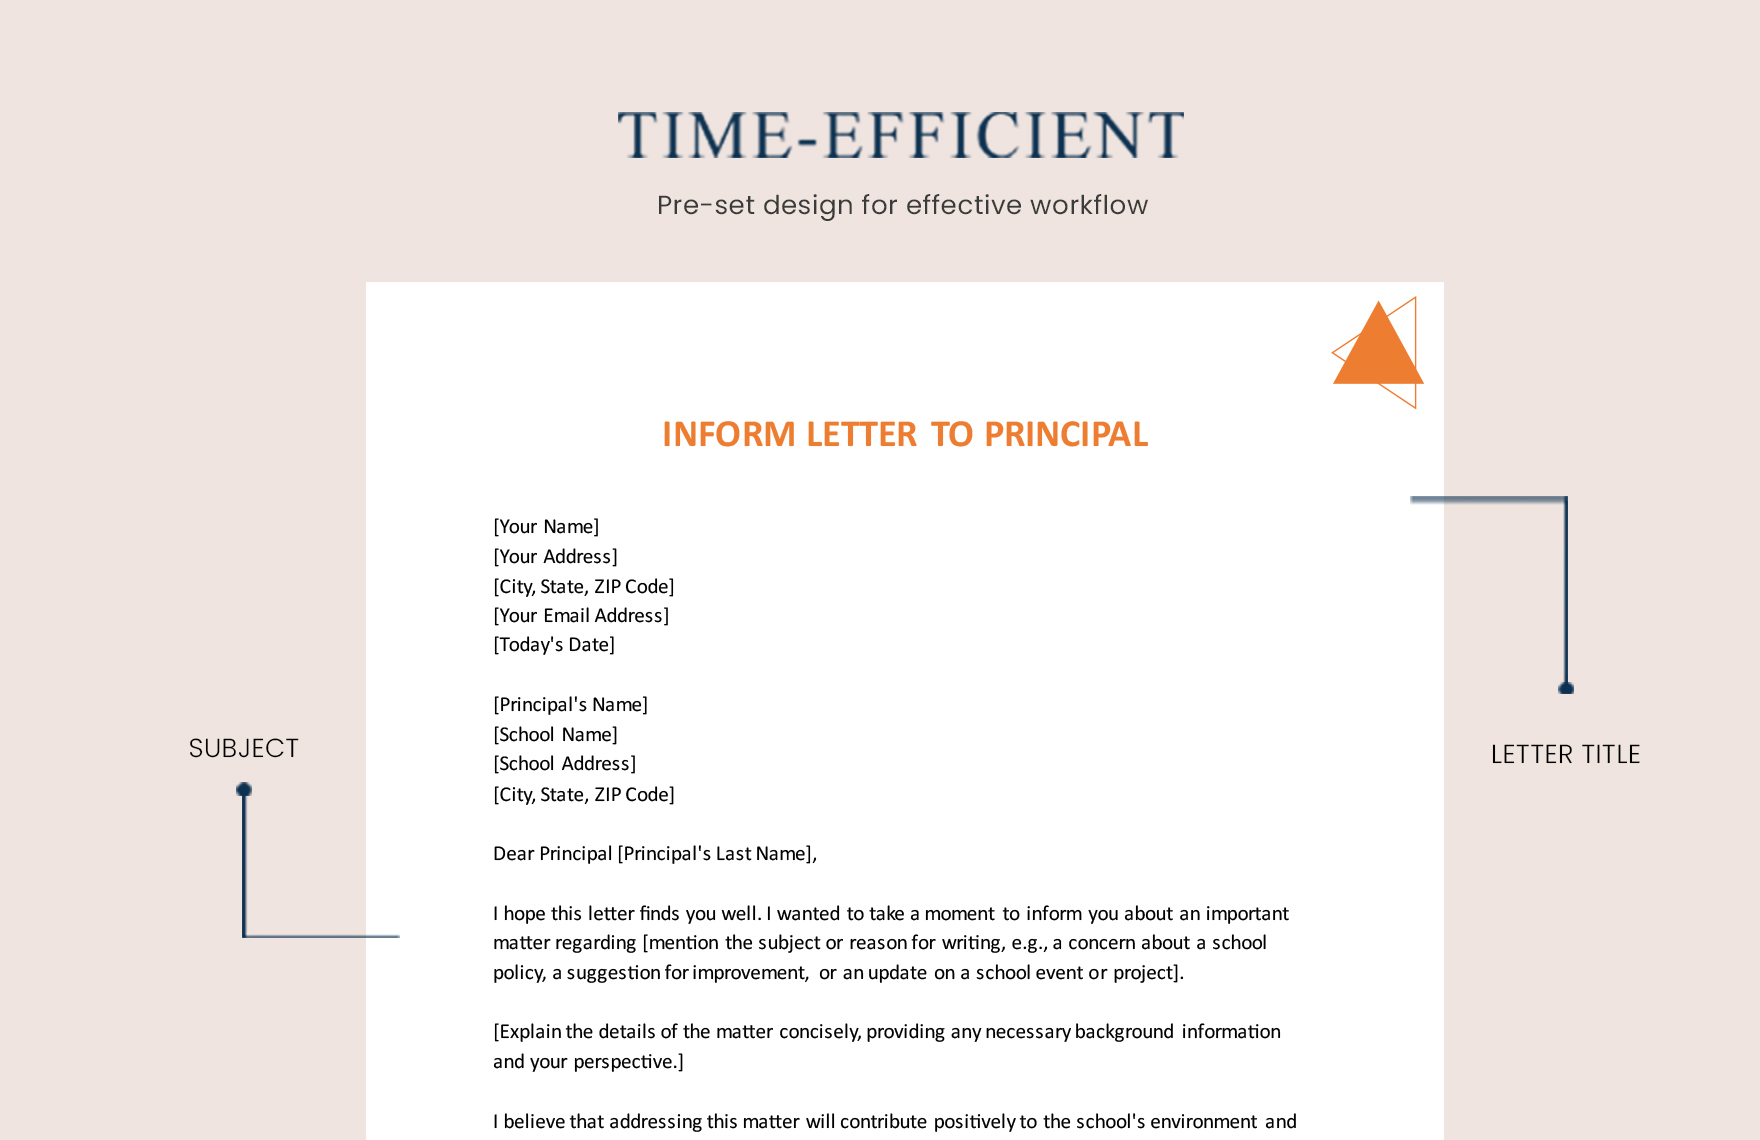 Inform Letter To Principal